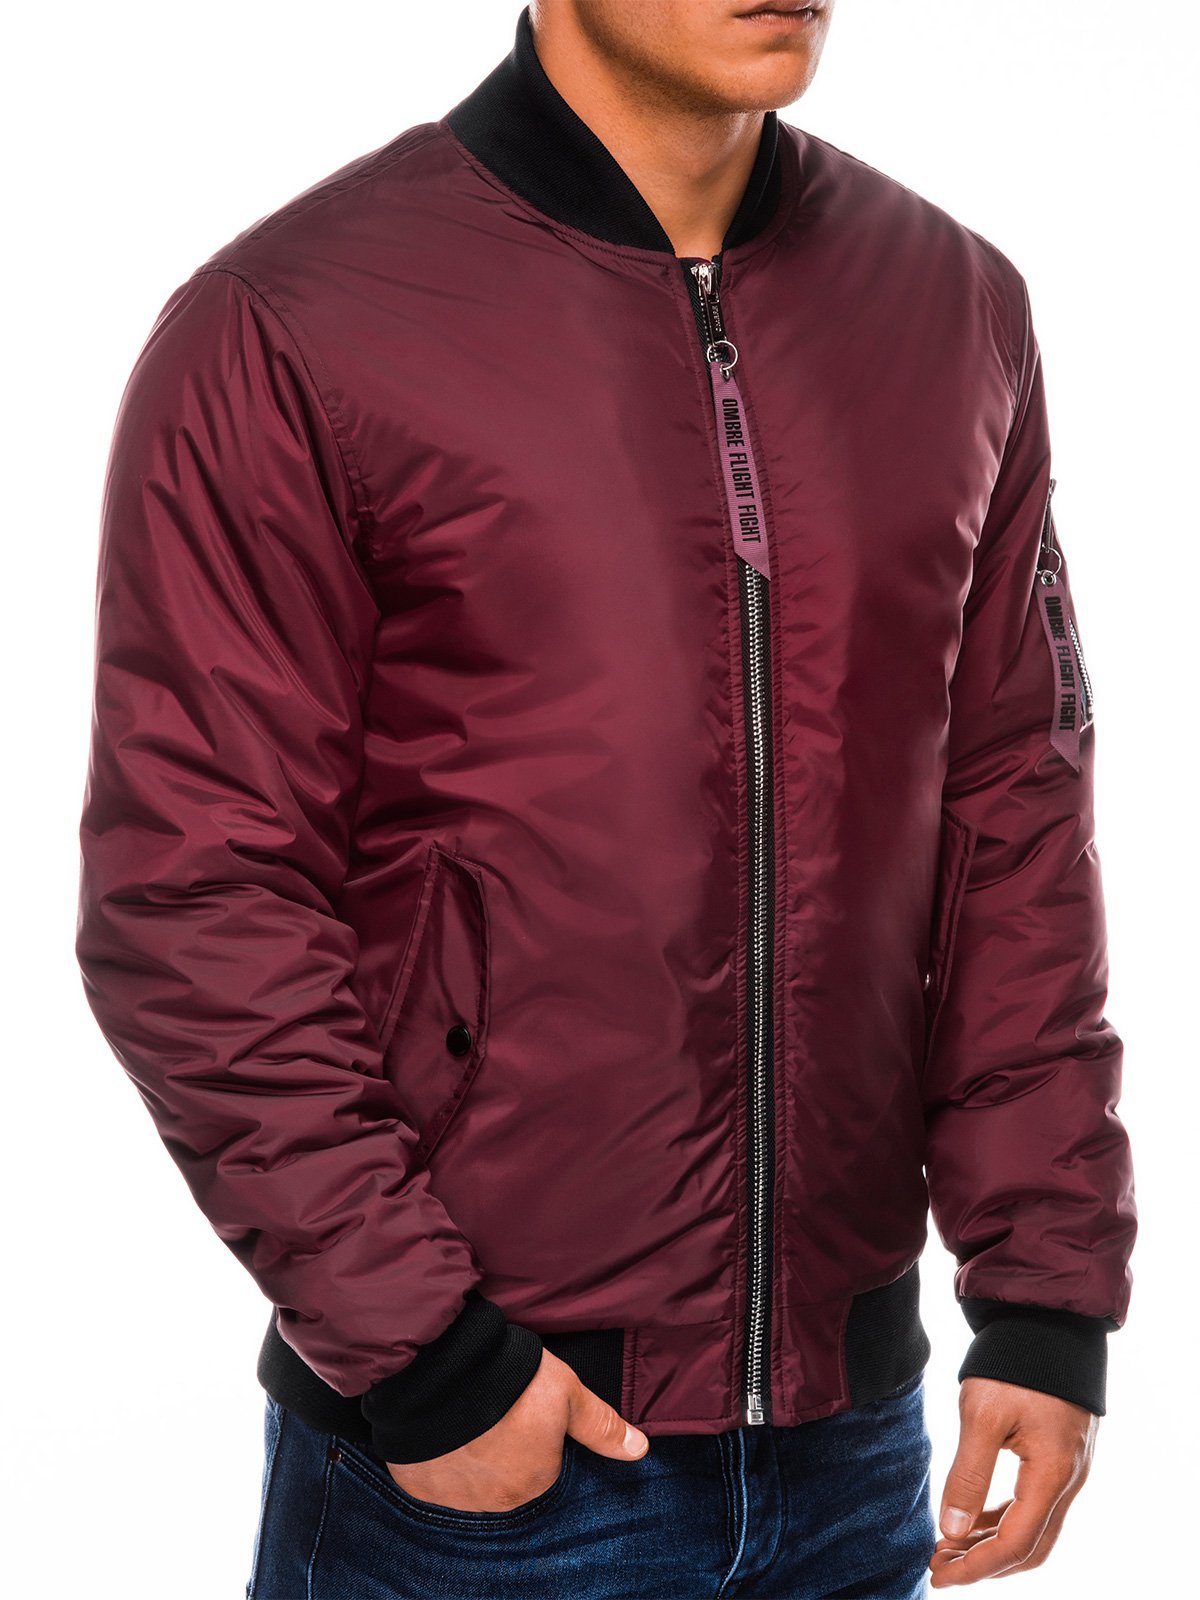 Men's mid-season bomber jacket C330 - dark red | MODONE wholesale ...